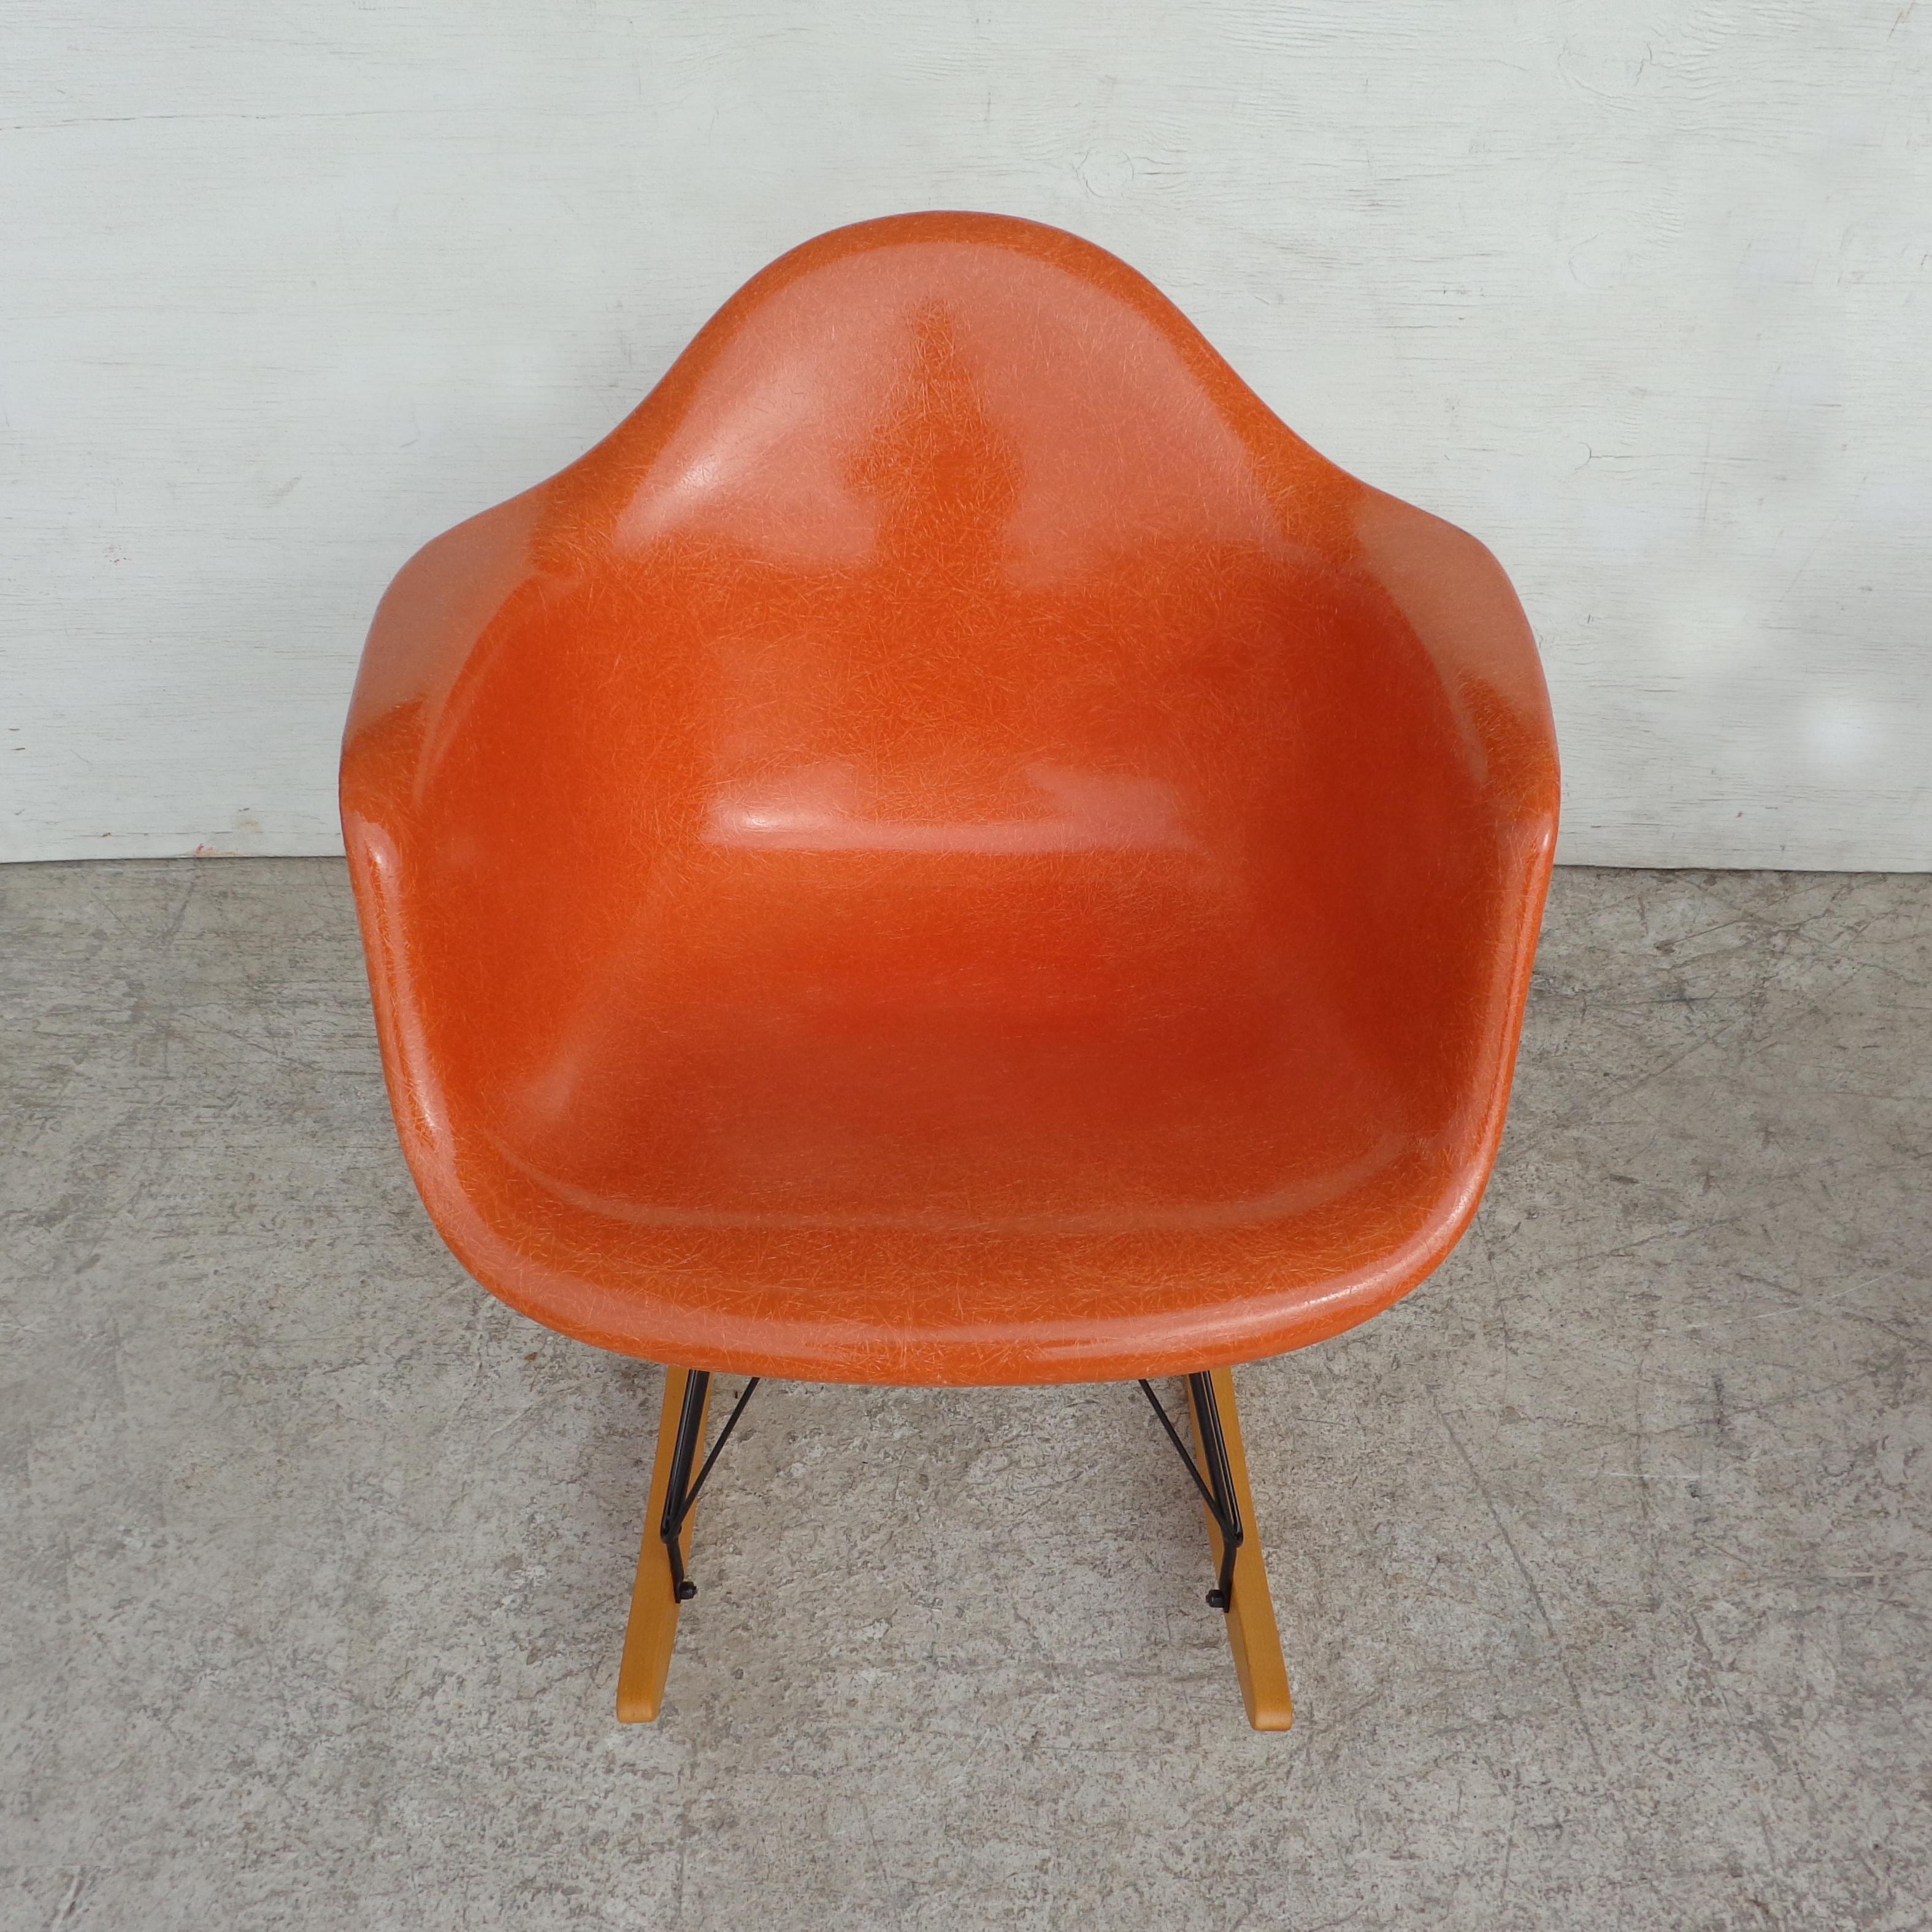 1 Herman Miller Orange Shell Fiberglass RAR Rocker by Eames In Good Condition For Sale In Pasadena, TX